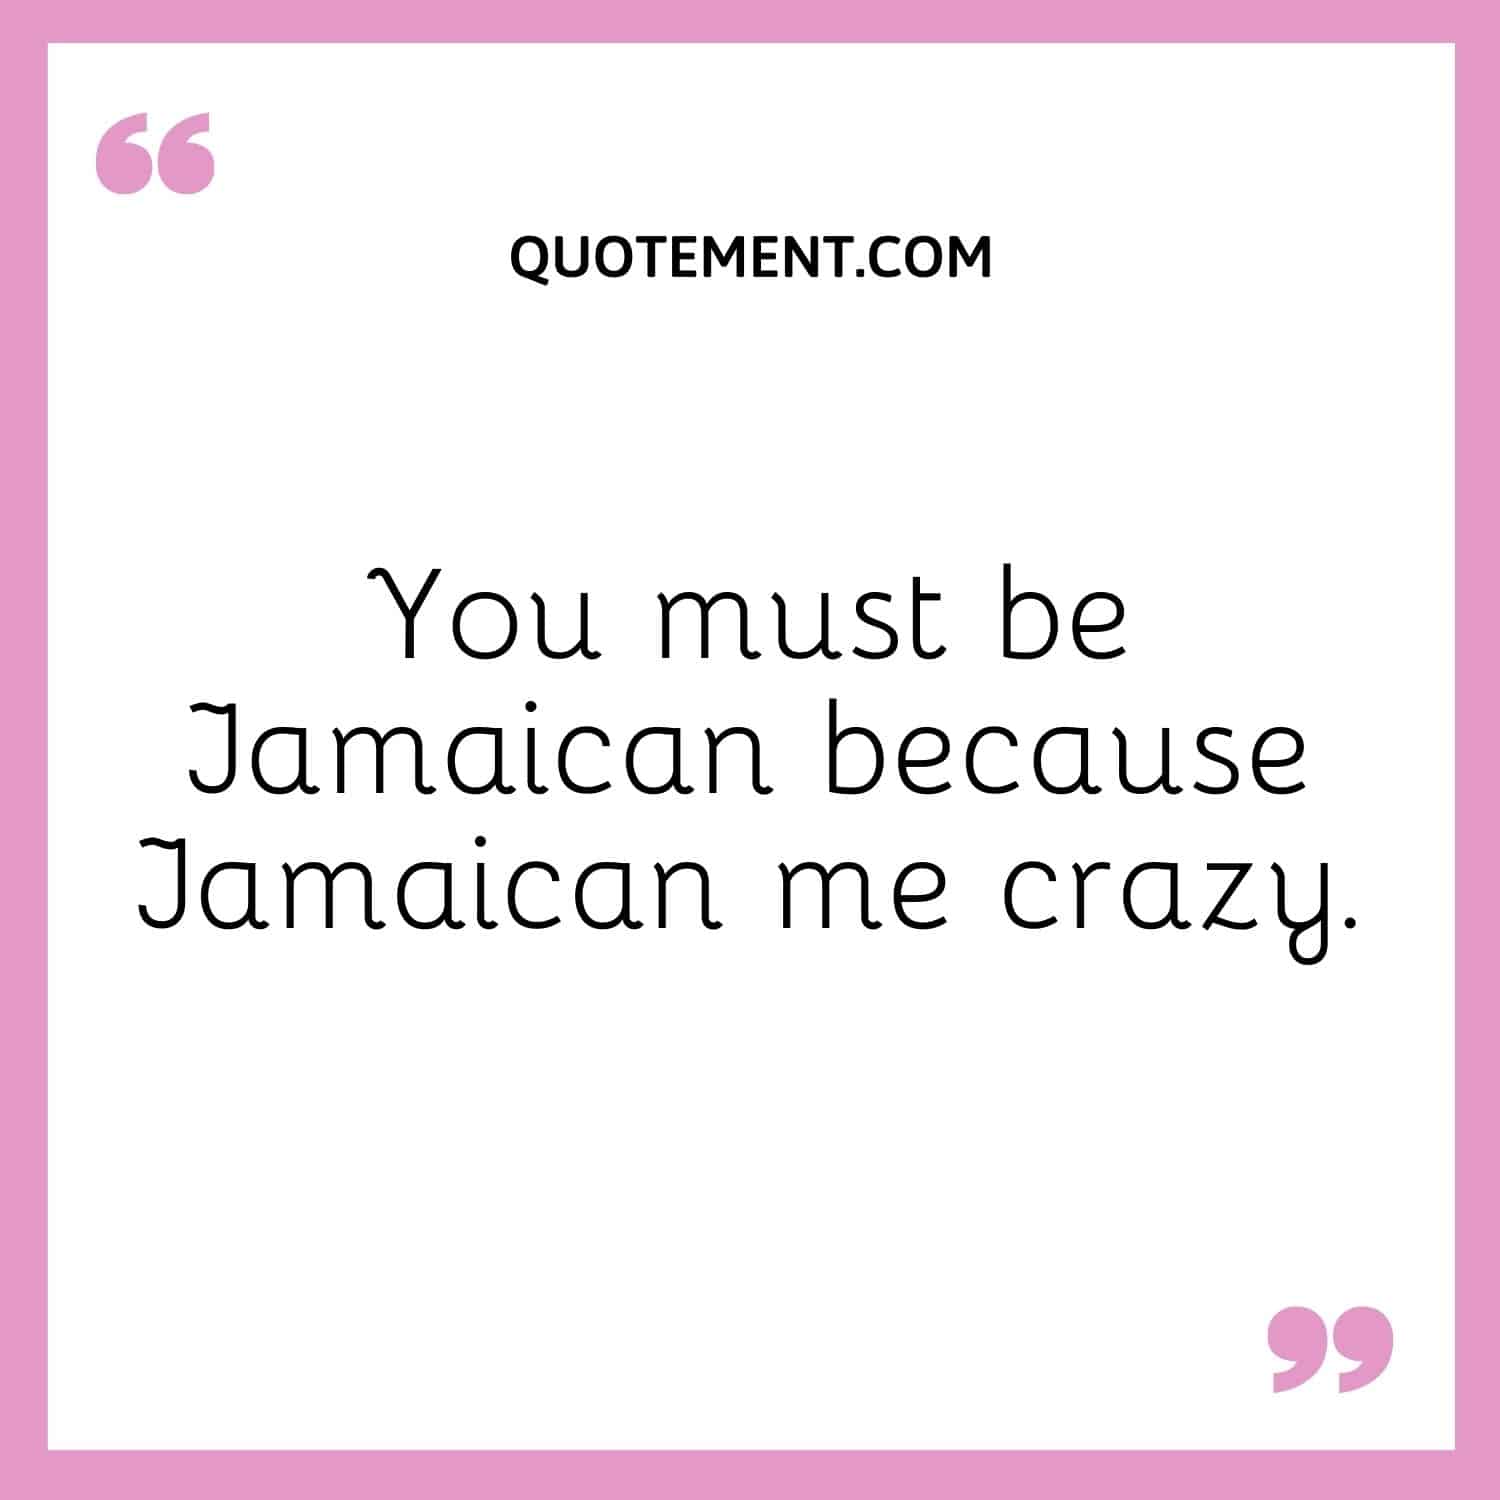 You must be Jamaican because Jamaican me crazy